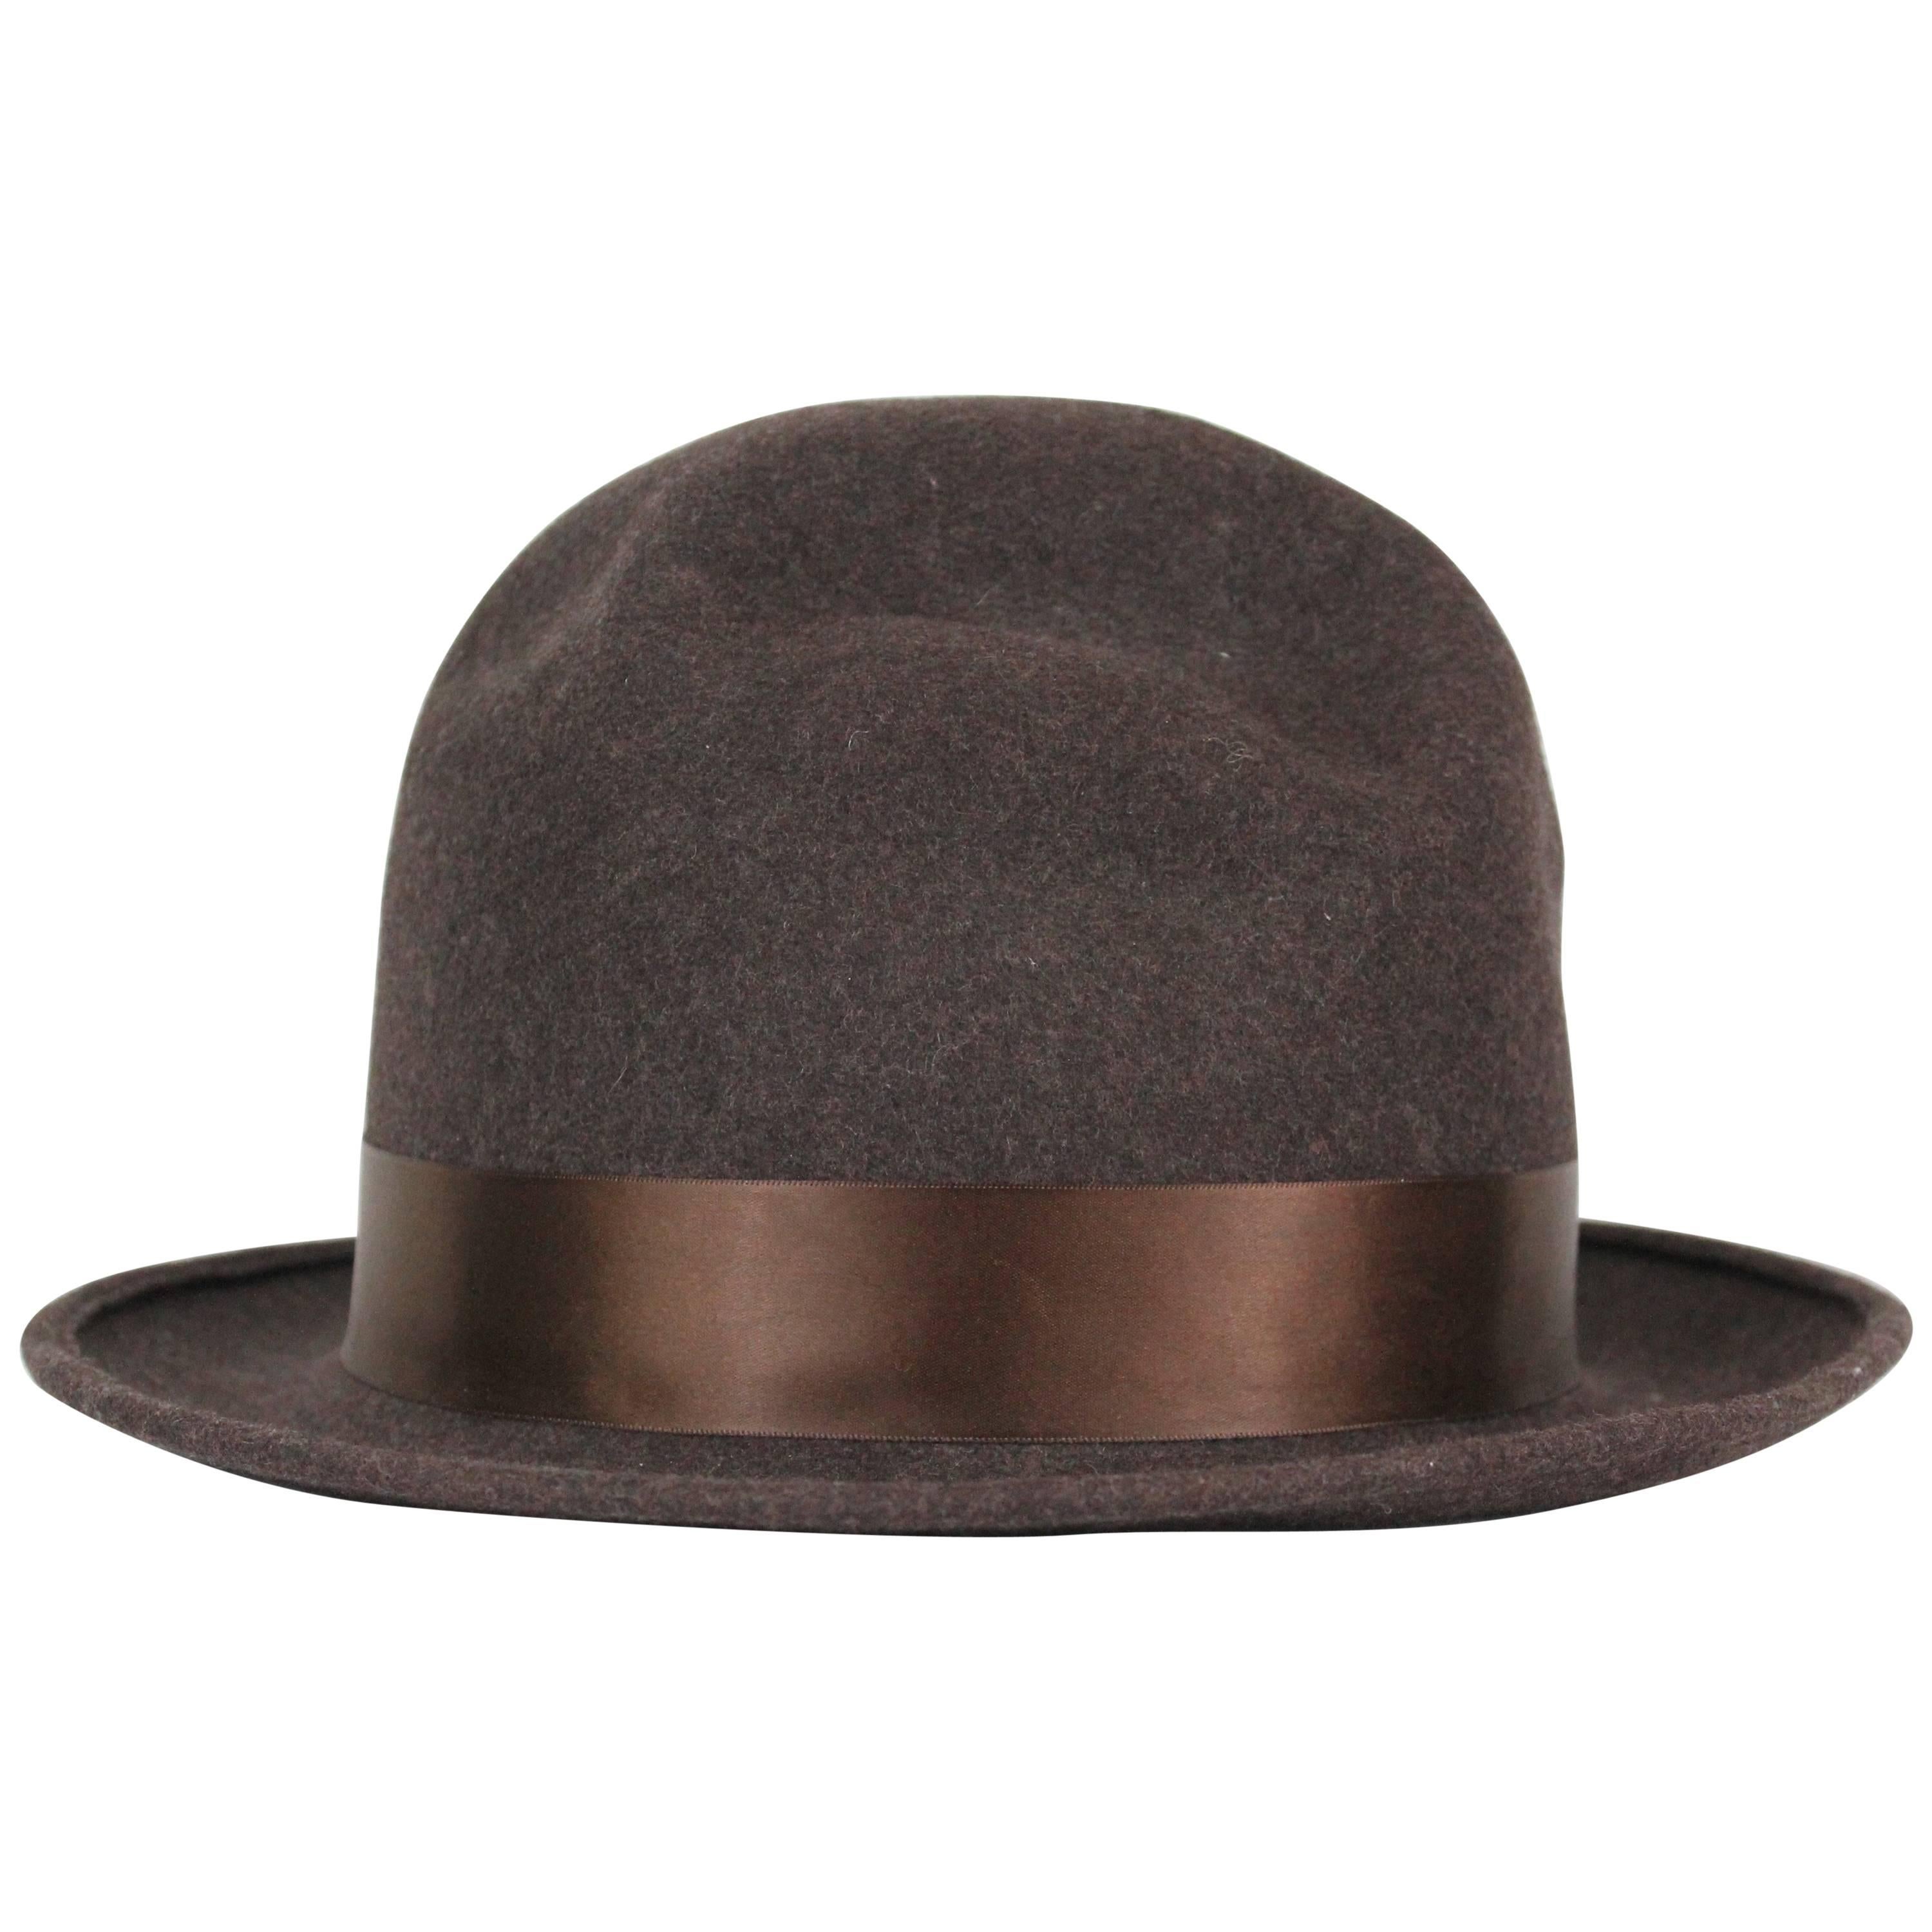 Christian Dior Brown Wool Felt Bowler Hat, c. 2000's, US Hat Size 8